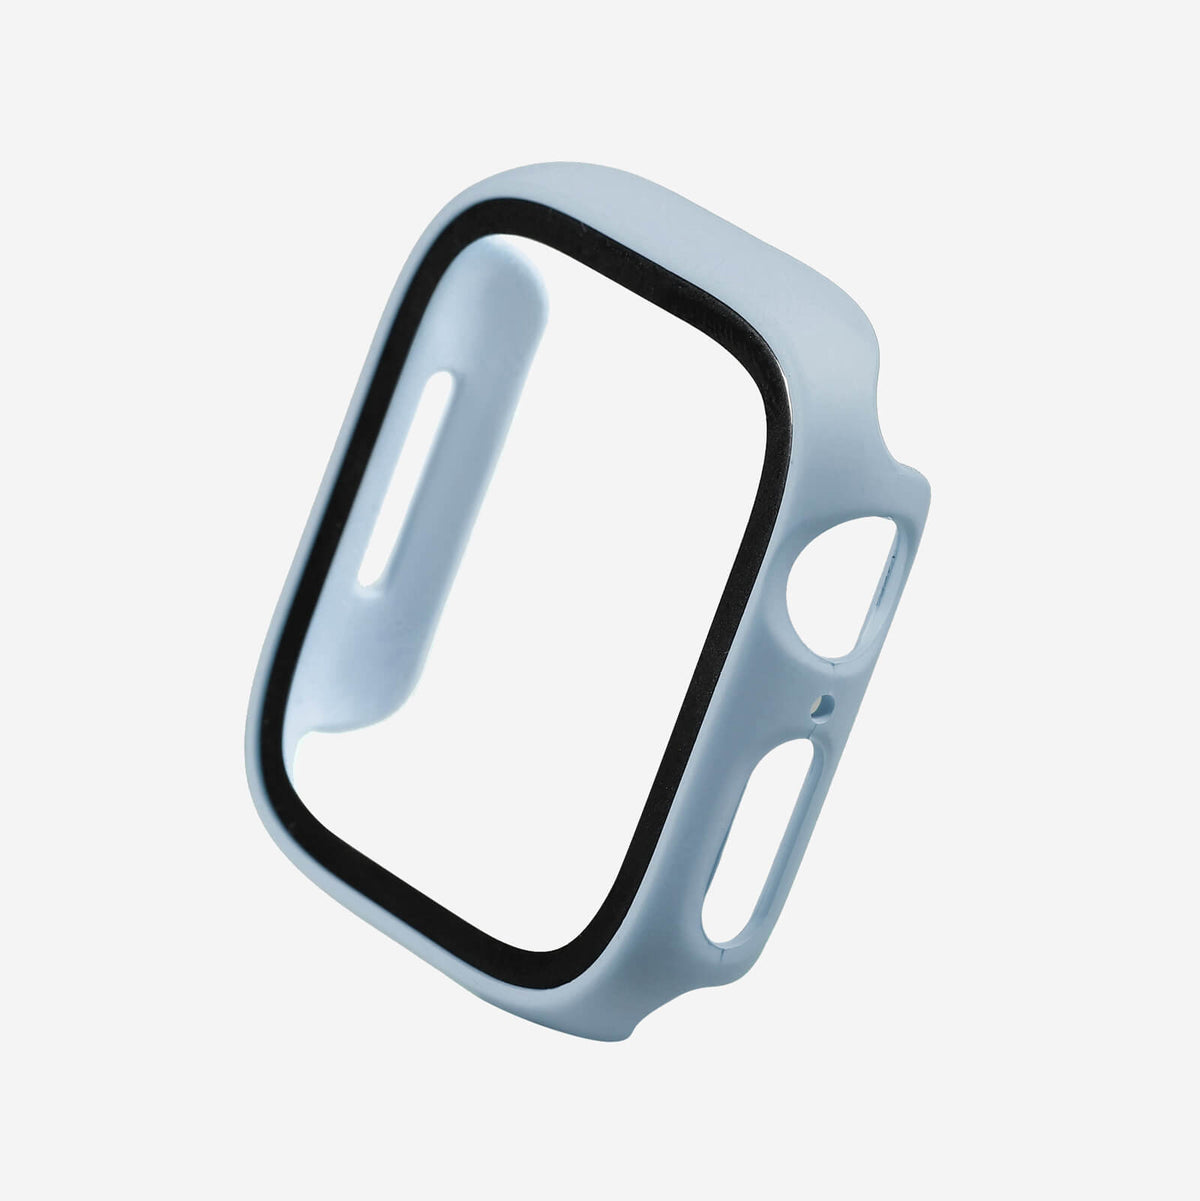 Apple Watch Slim Screen Protector Case - Blue Mist